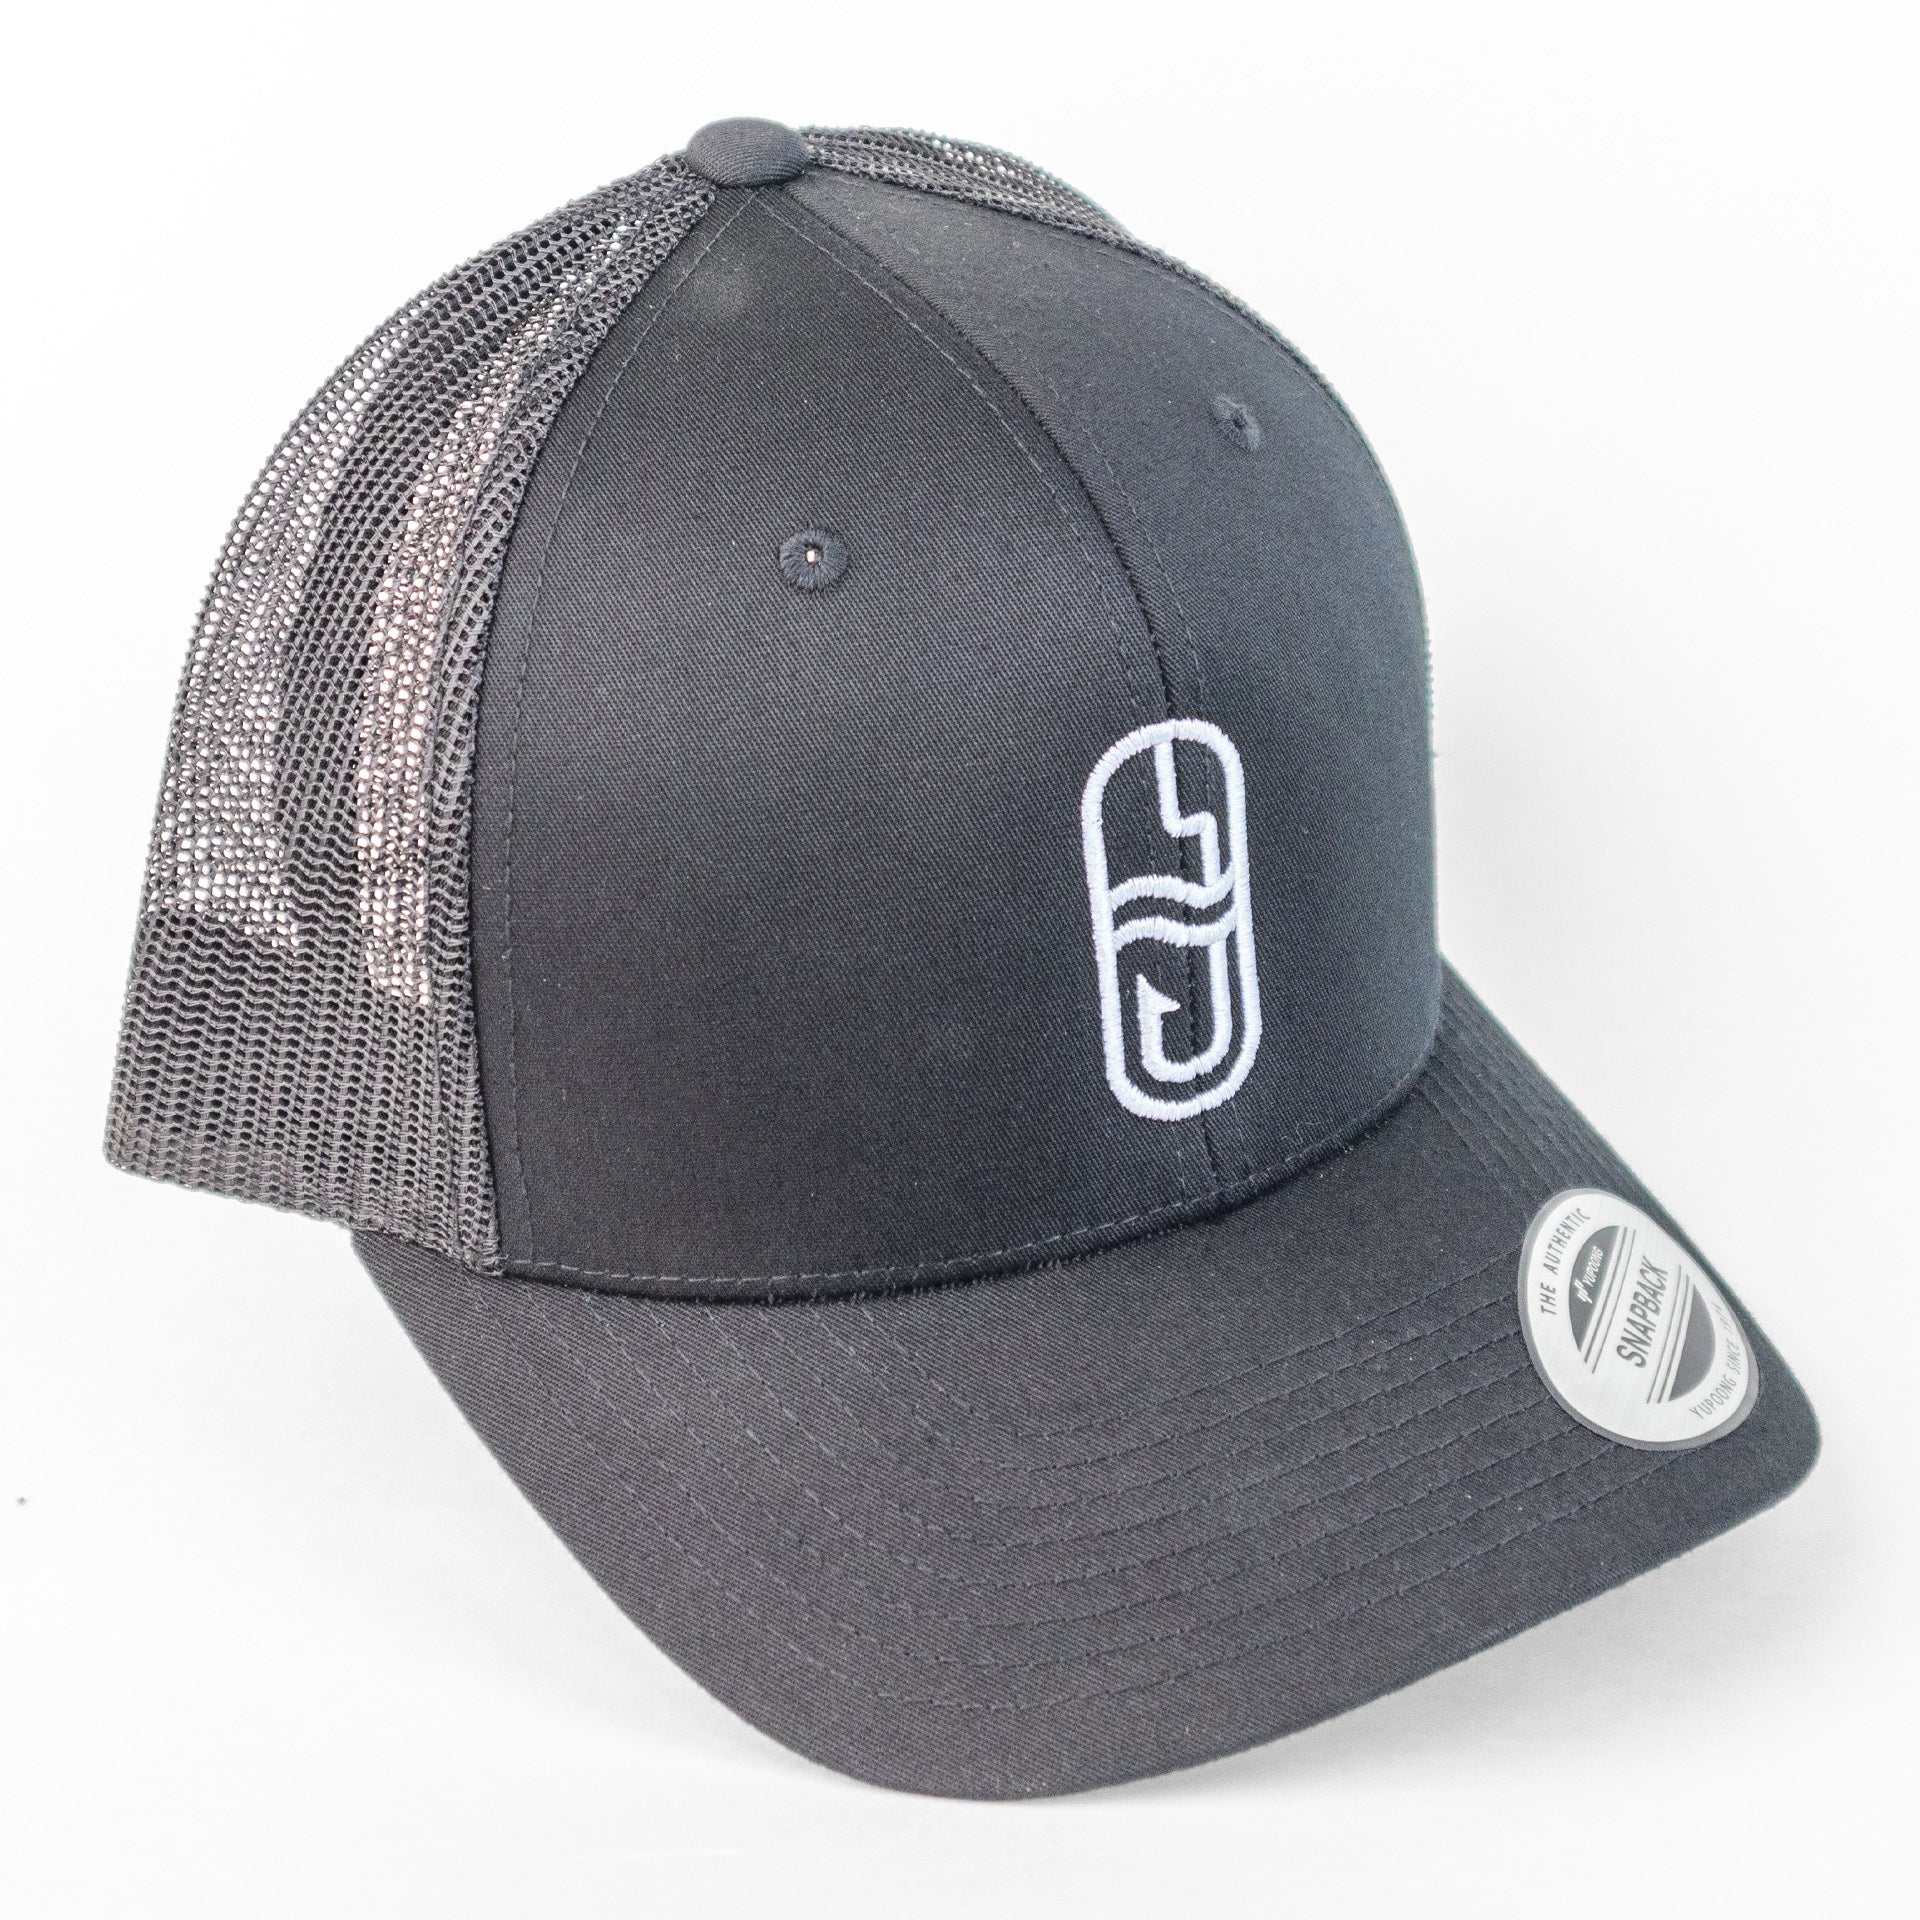 FO - SnapBack Hat